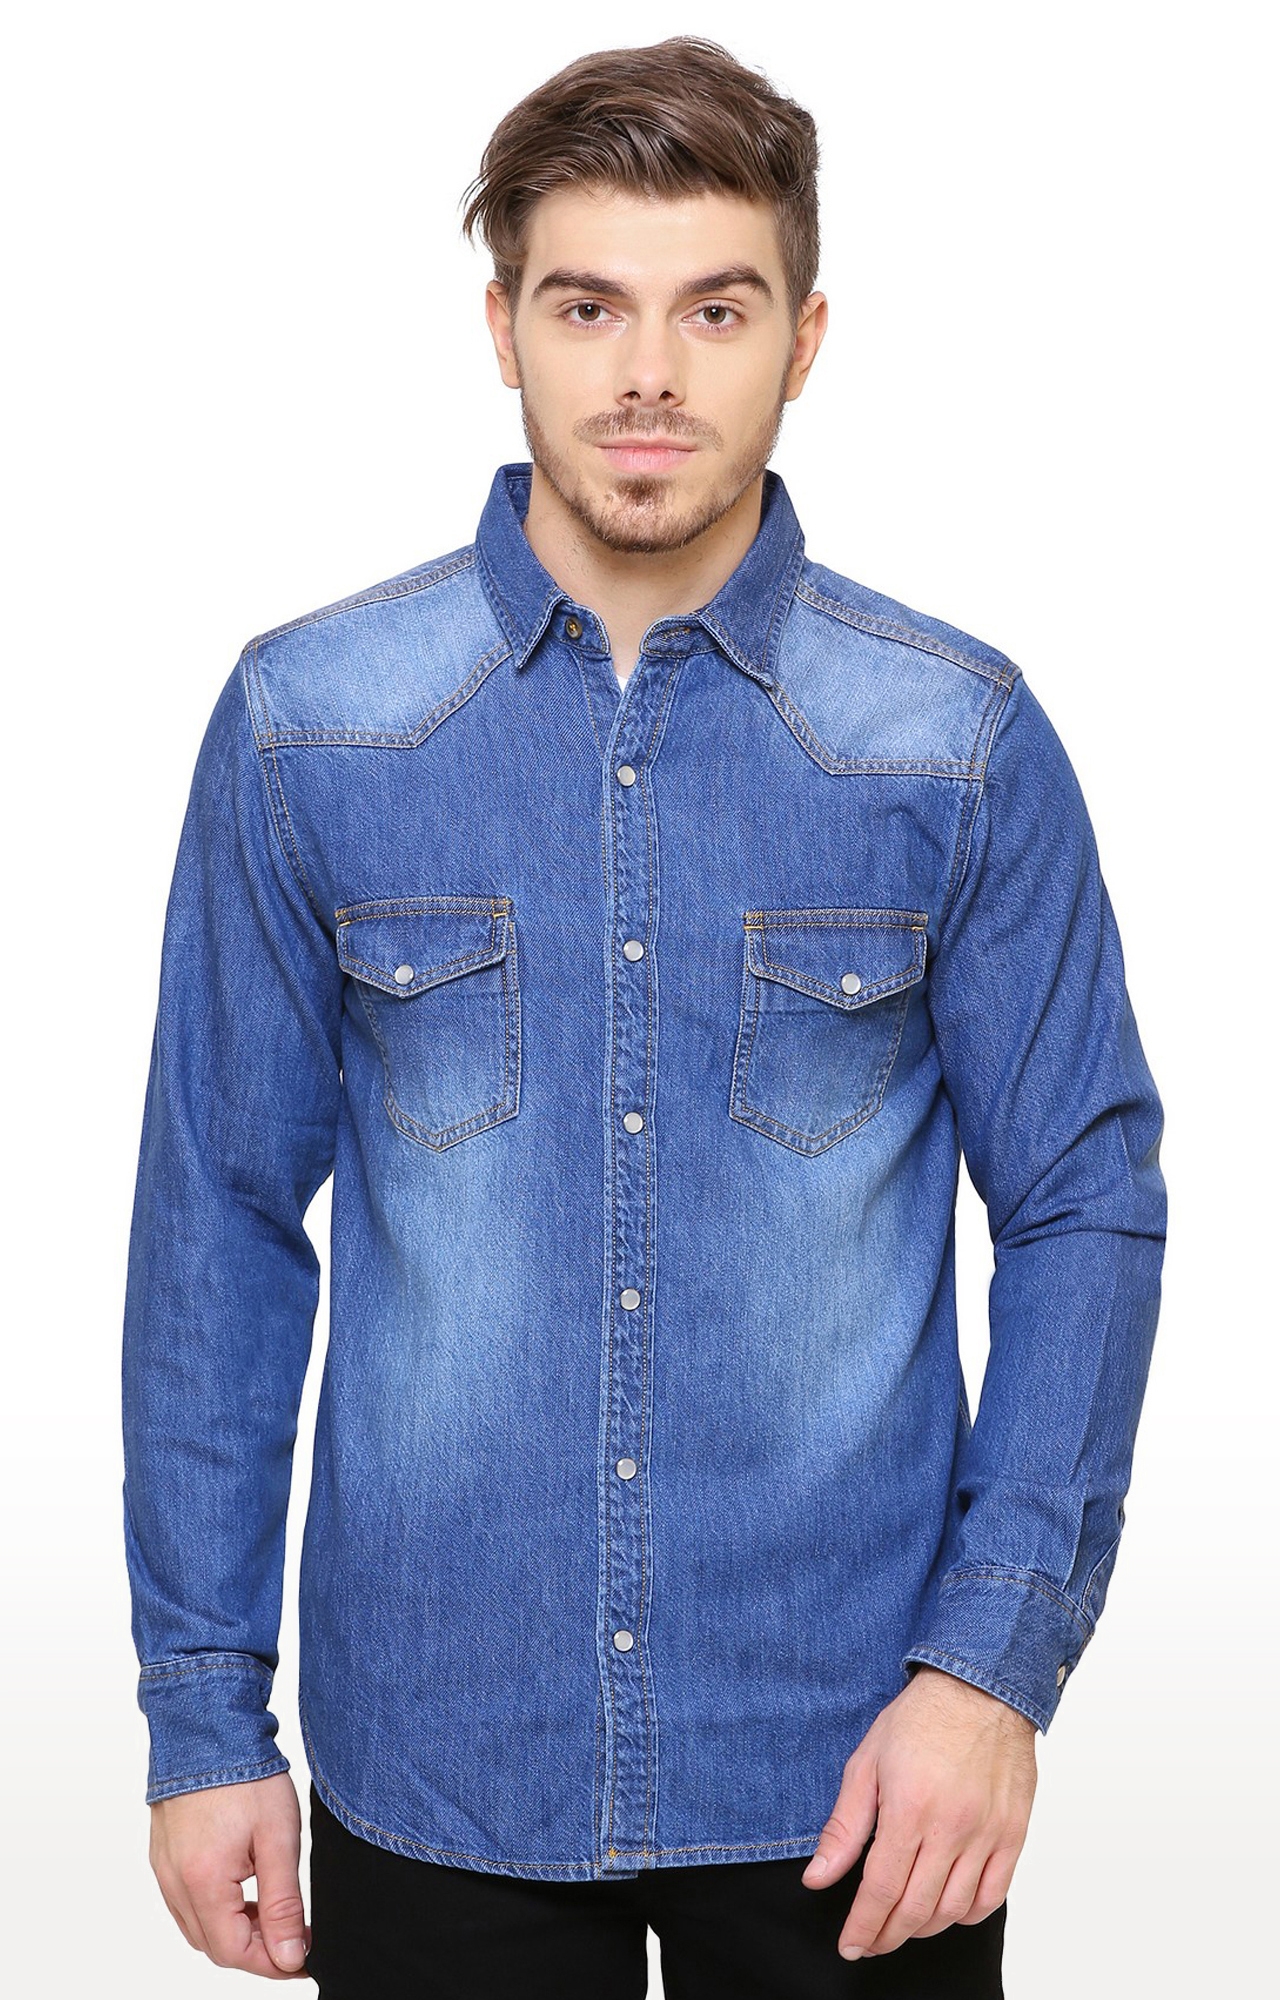 Southbay Men's Medium Blue Casual Denim Shirt